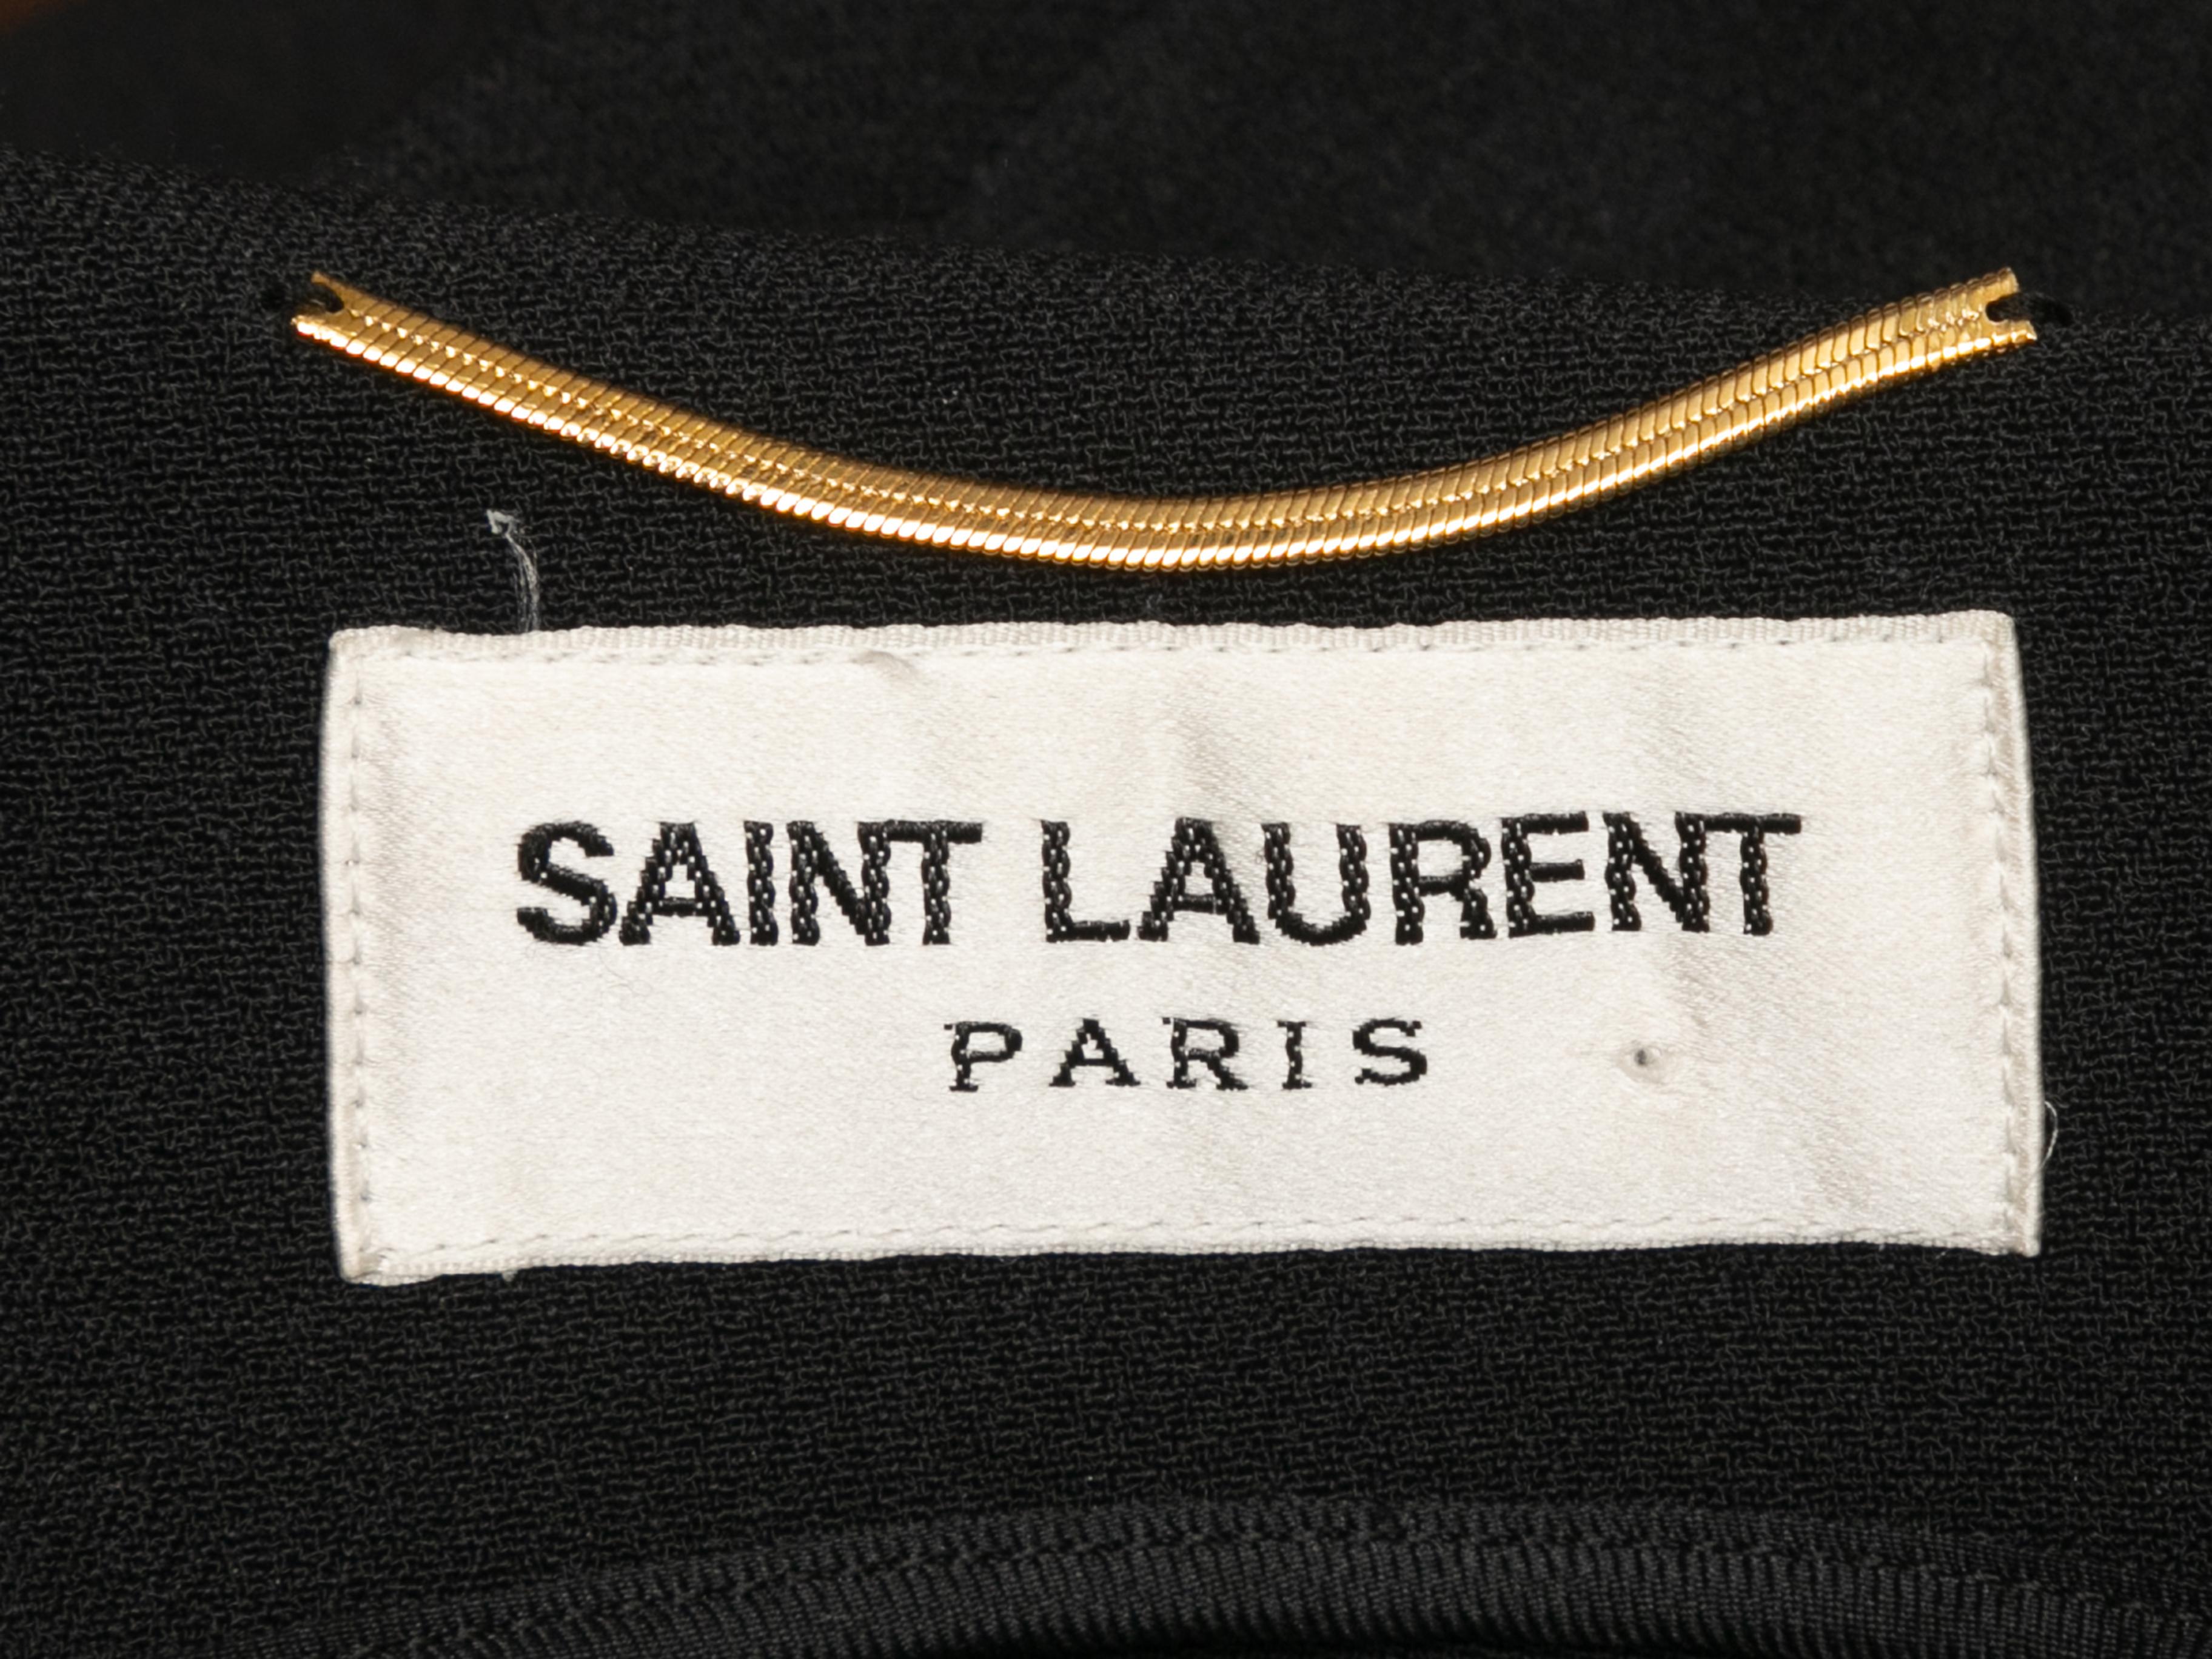 Black long sleeve mini dress by Saint Laurent. Mesh panel accent at front bodice. Leather waist detail. 30